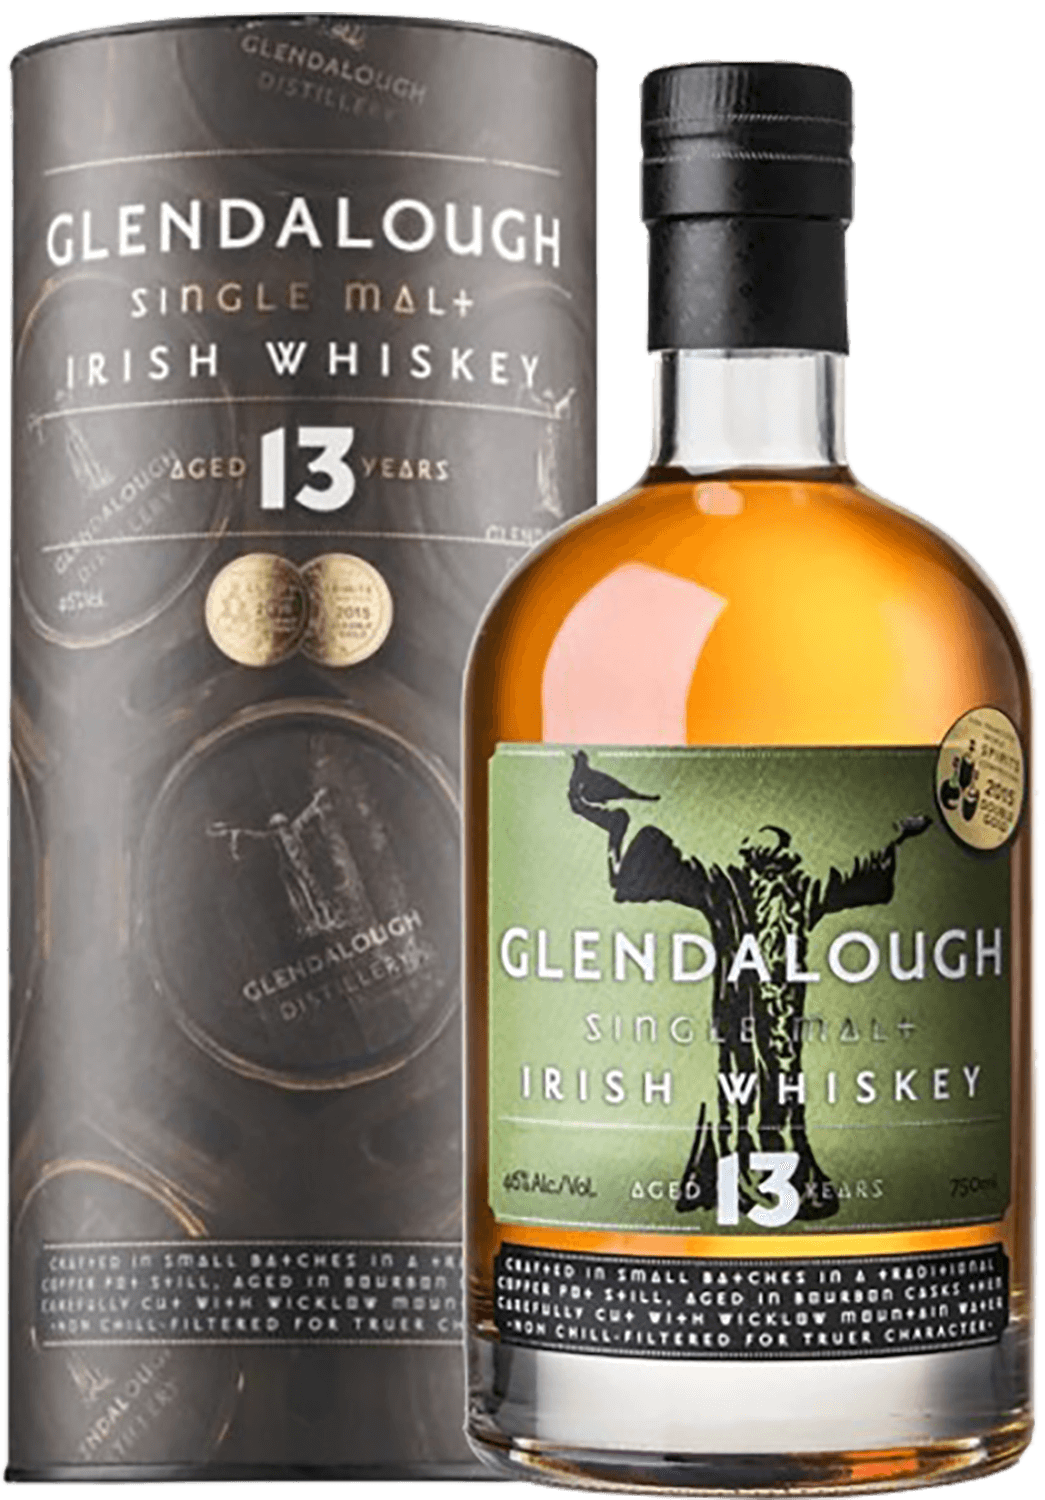 Glendalough 13 y.o. Single Malt Irish Whiskey (gift box) goalong single malt whiskey small batch gift box